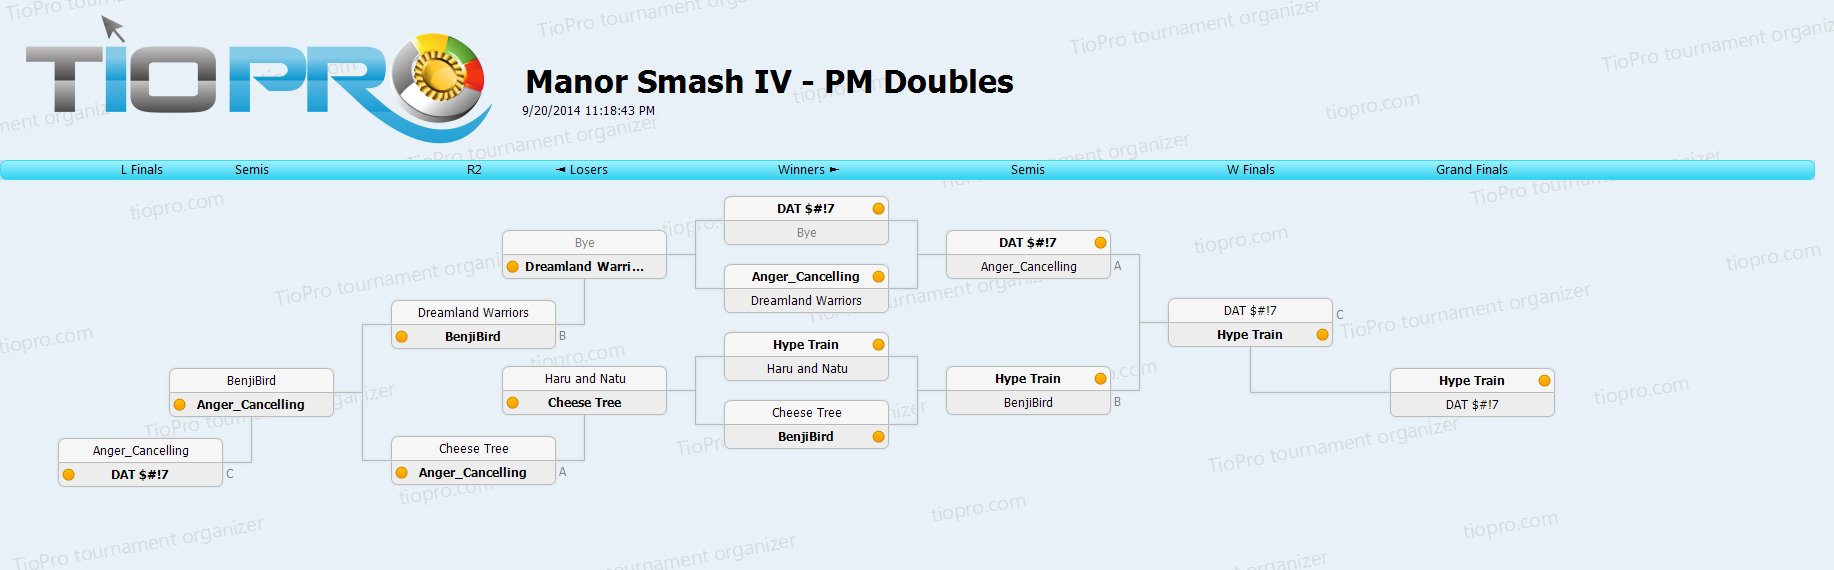 Manor Smash IV - PM Doubles